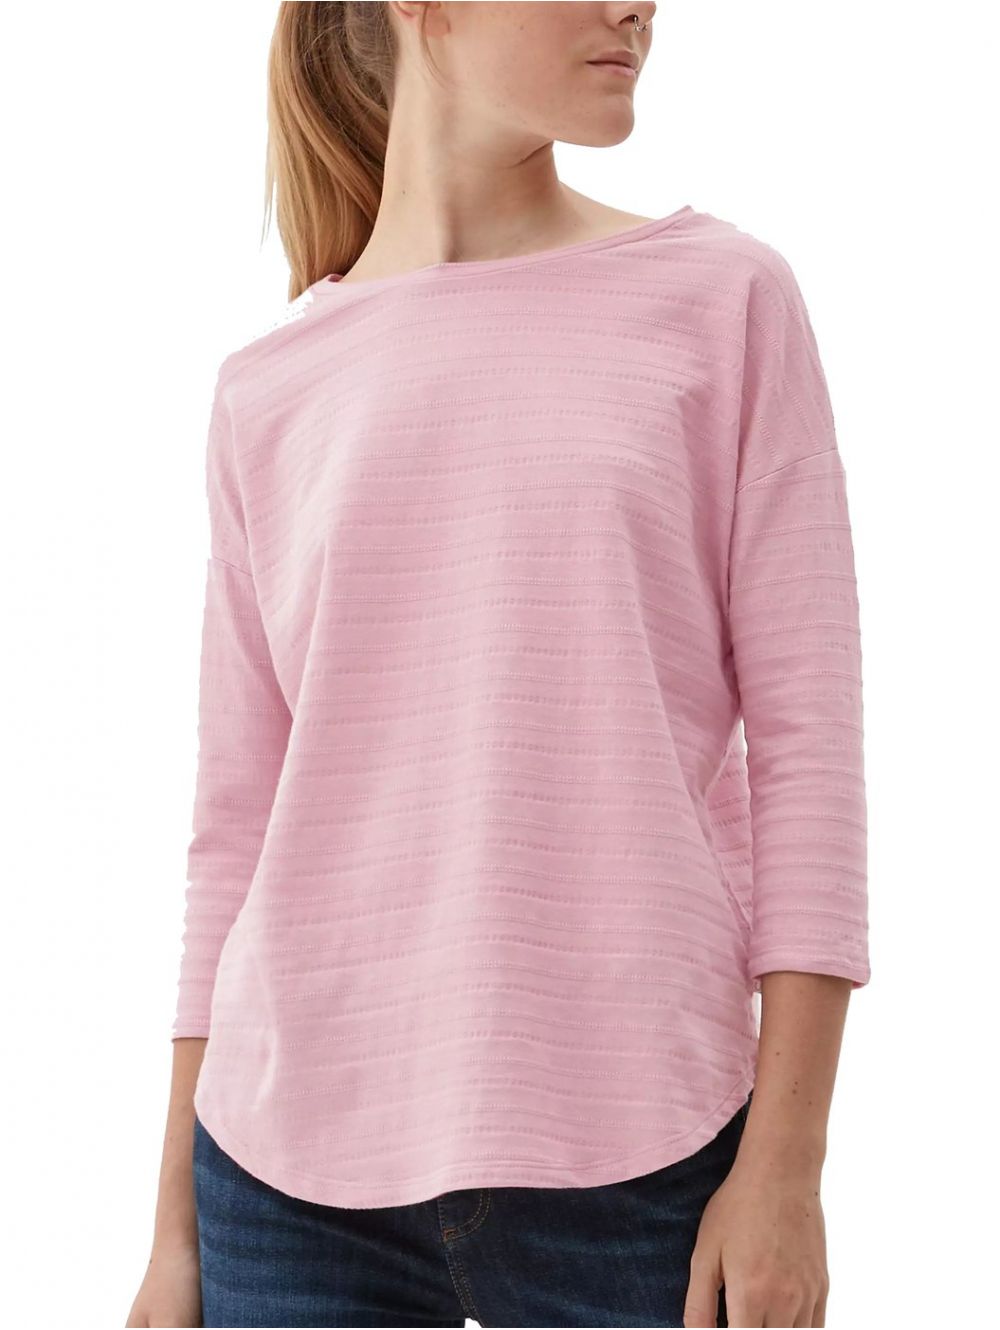 Rose blouse pink Women\'s 2119840.4311 S.OLIVER